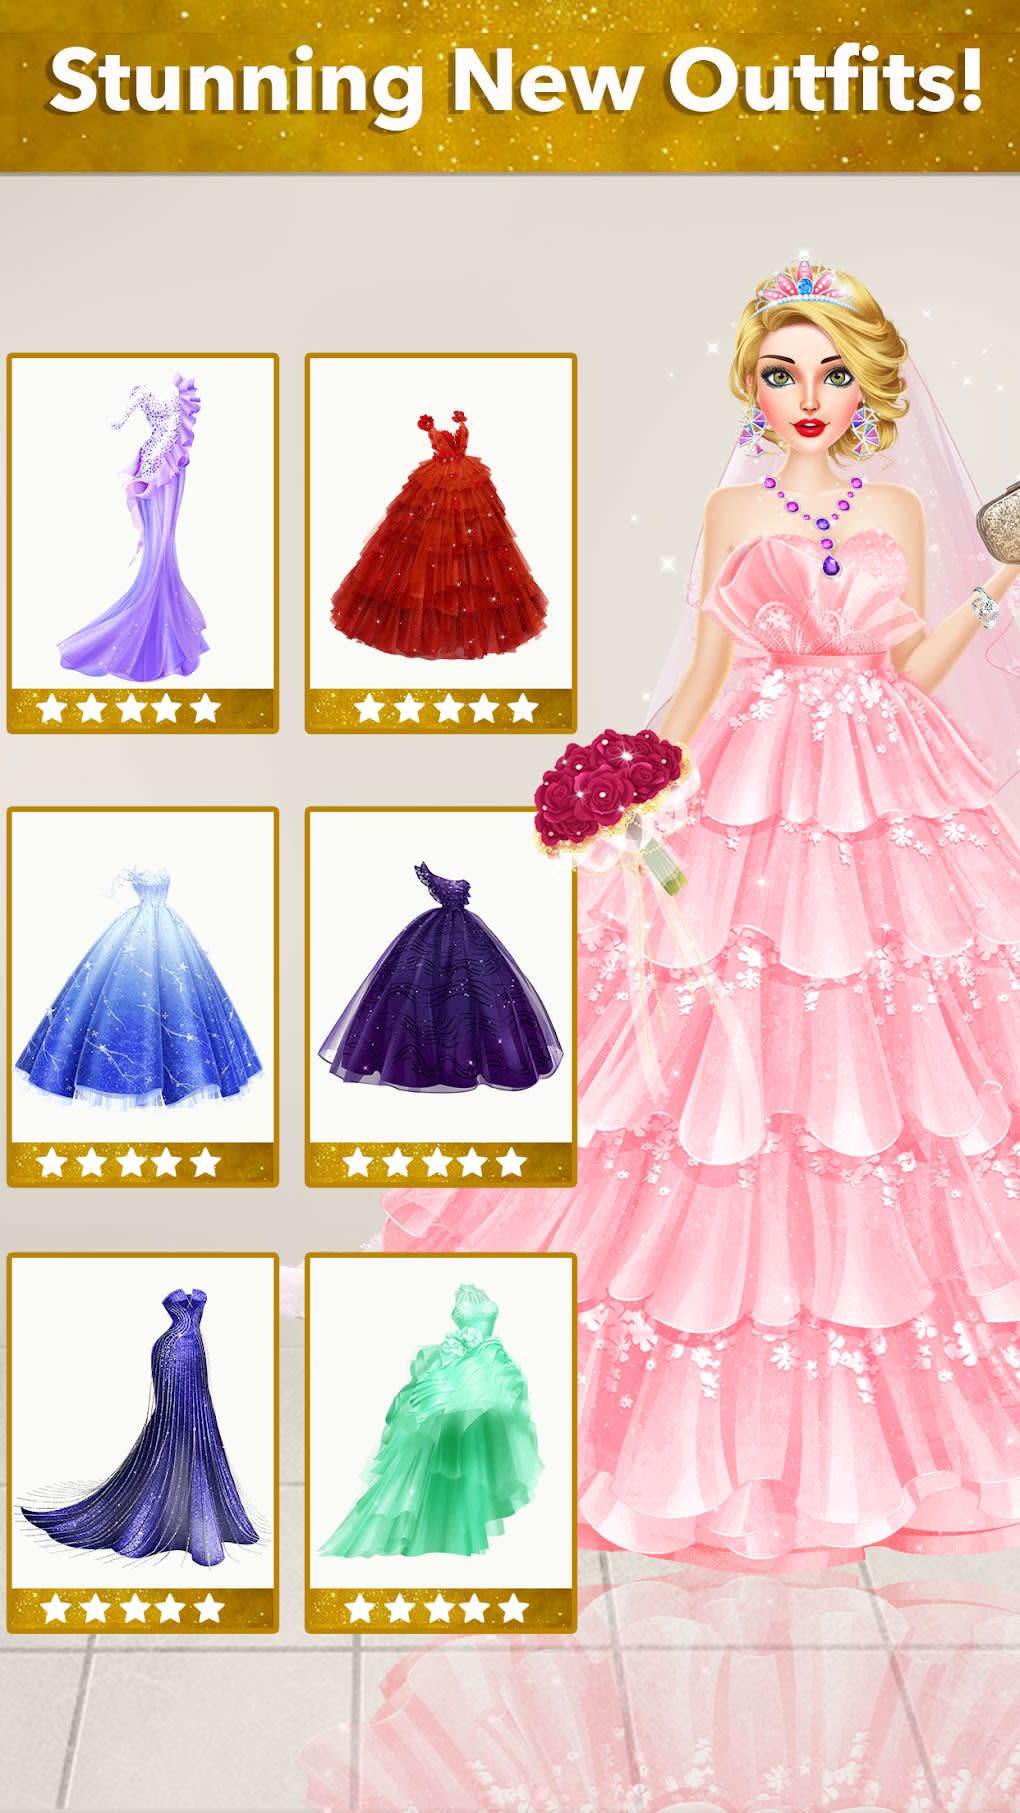 Cinderella Dress Up Girl Games: Play Free Online at Reludi